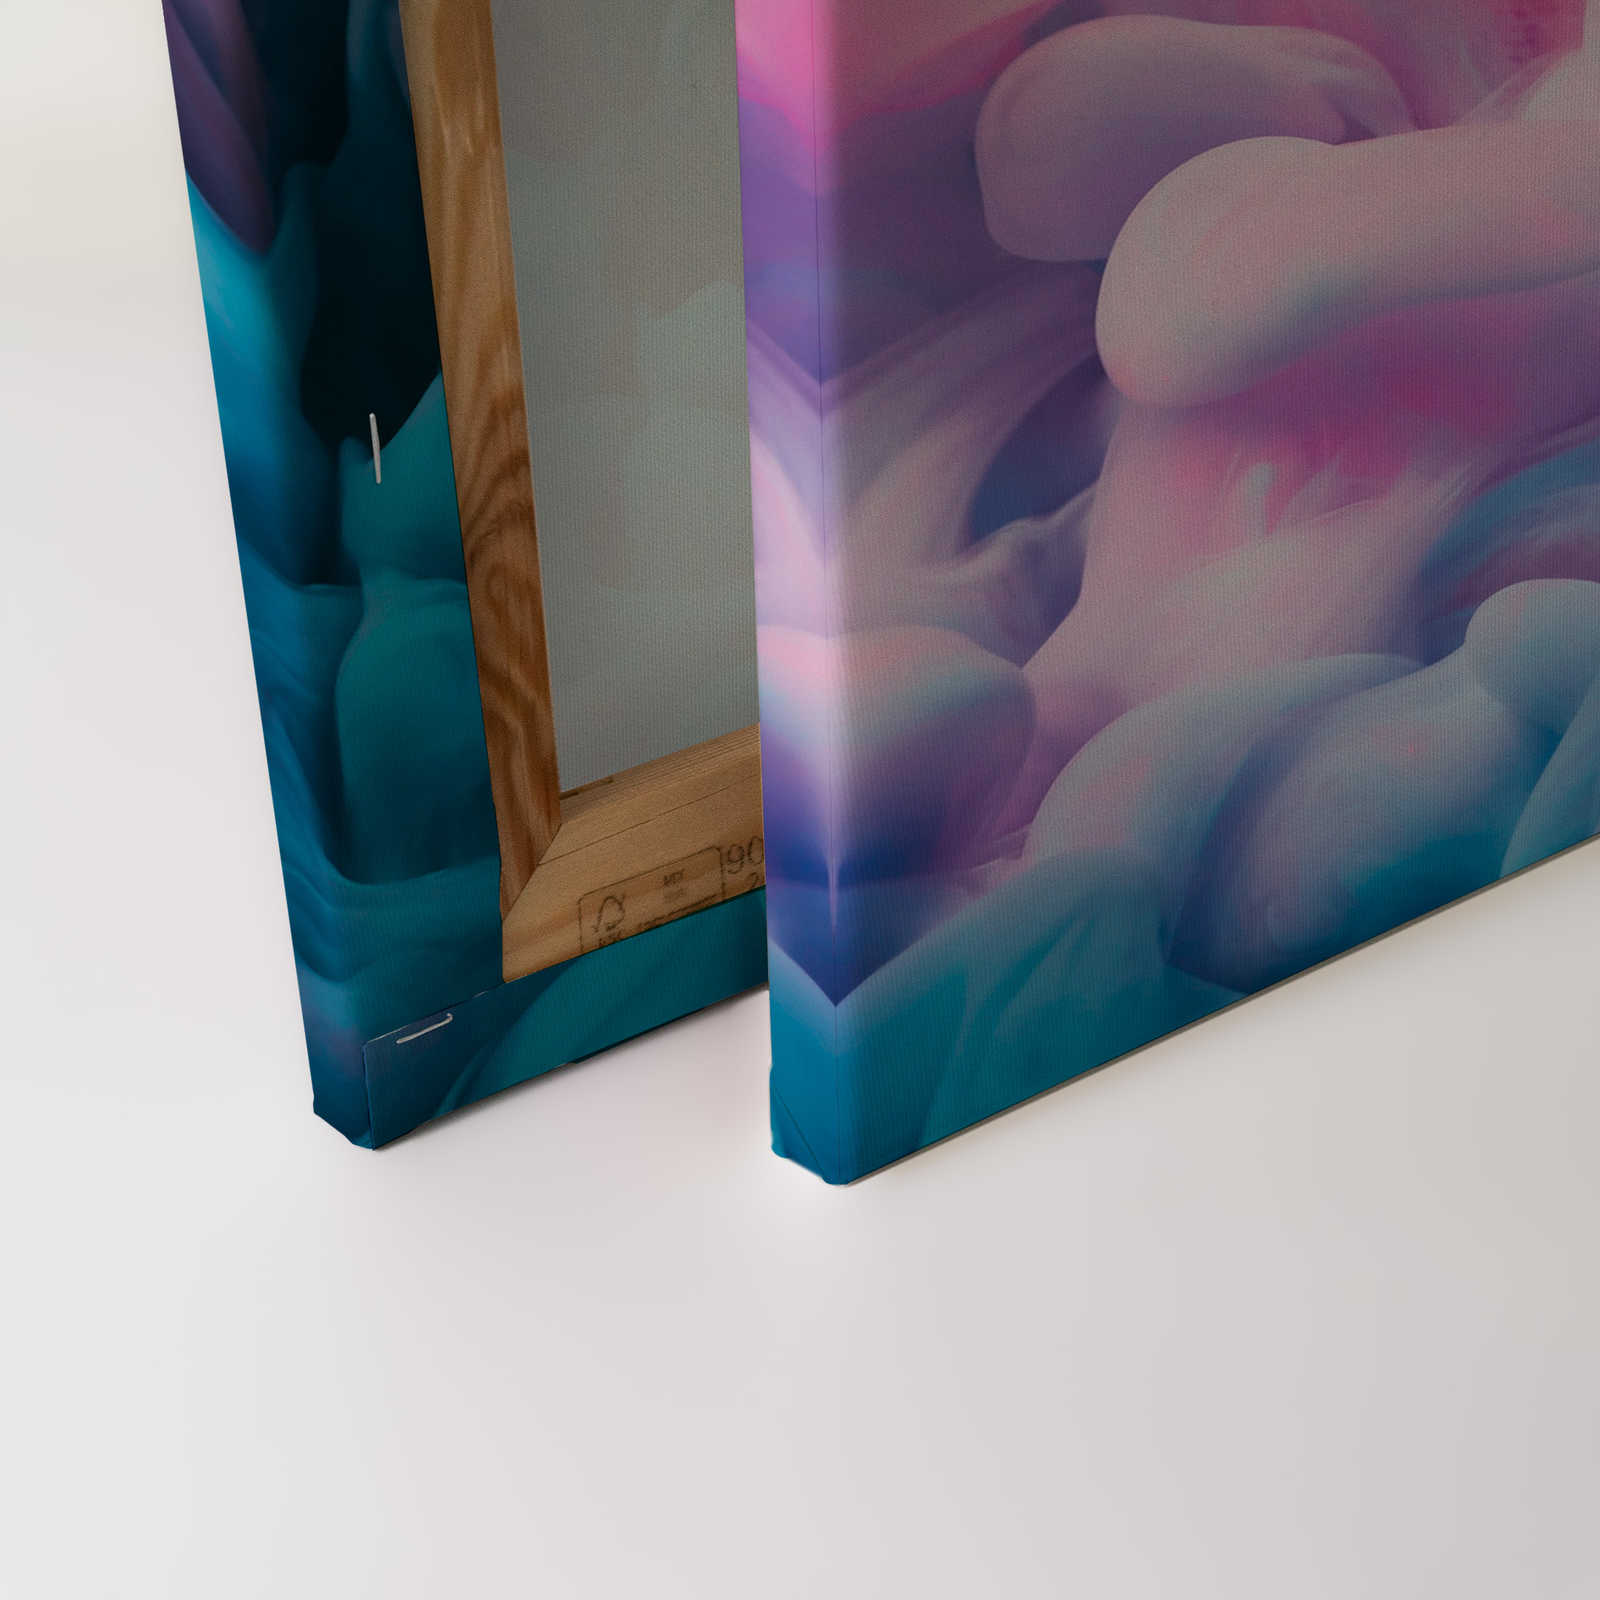             Coloured Smoke Canvas |Pink, Blue, White - 0.90 m x 0.60 m
        